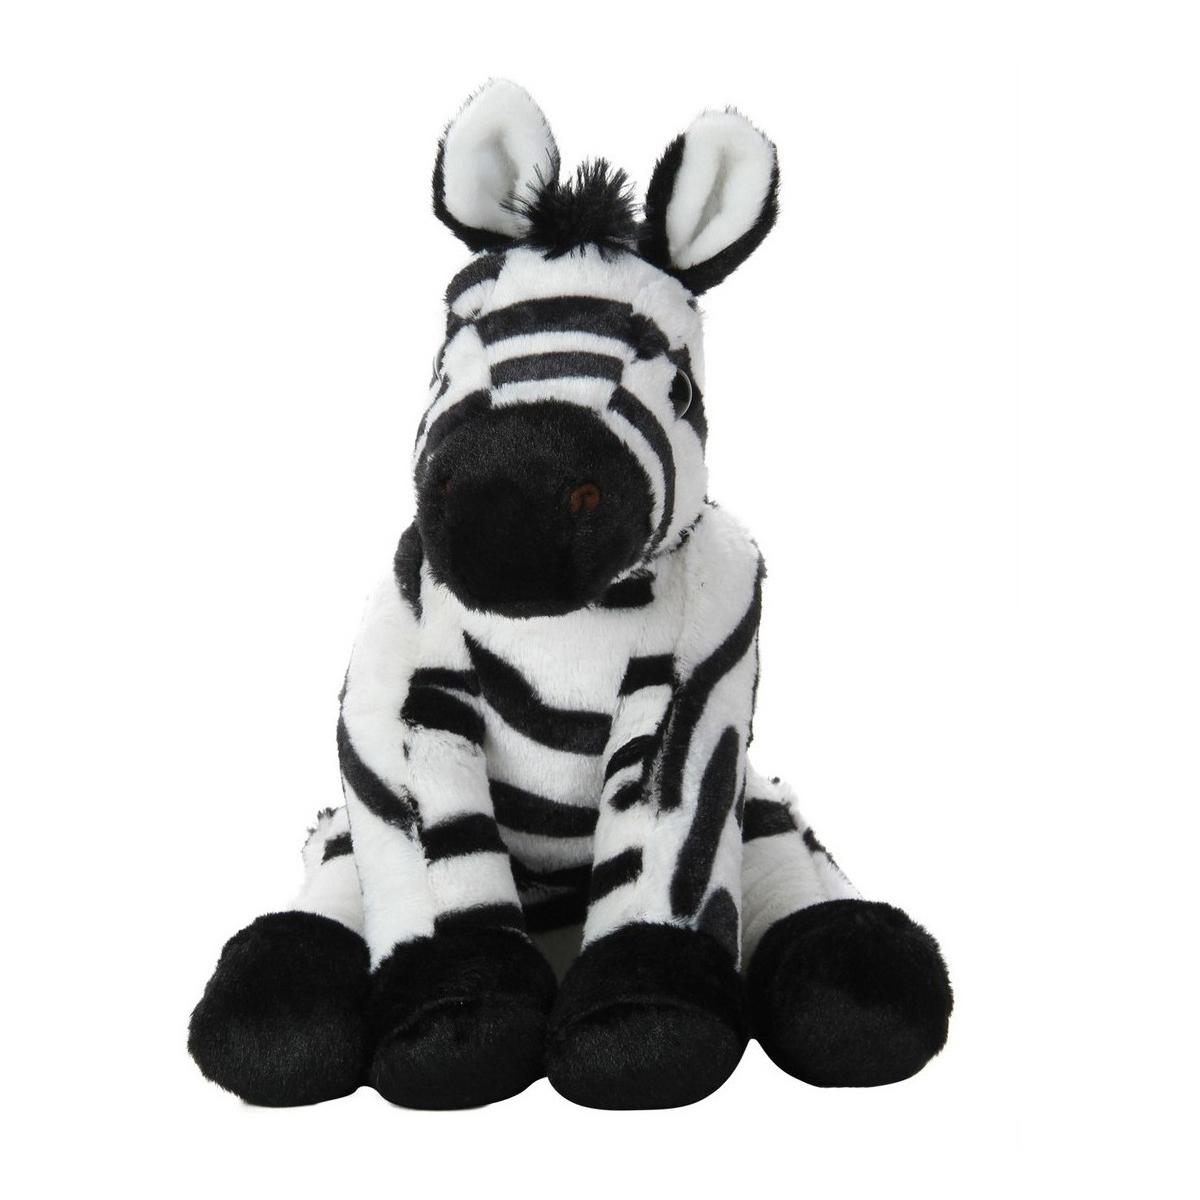 baby zebra stuffed animal